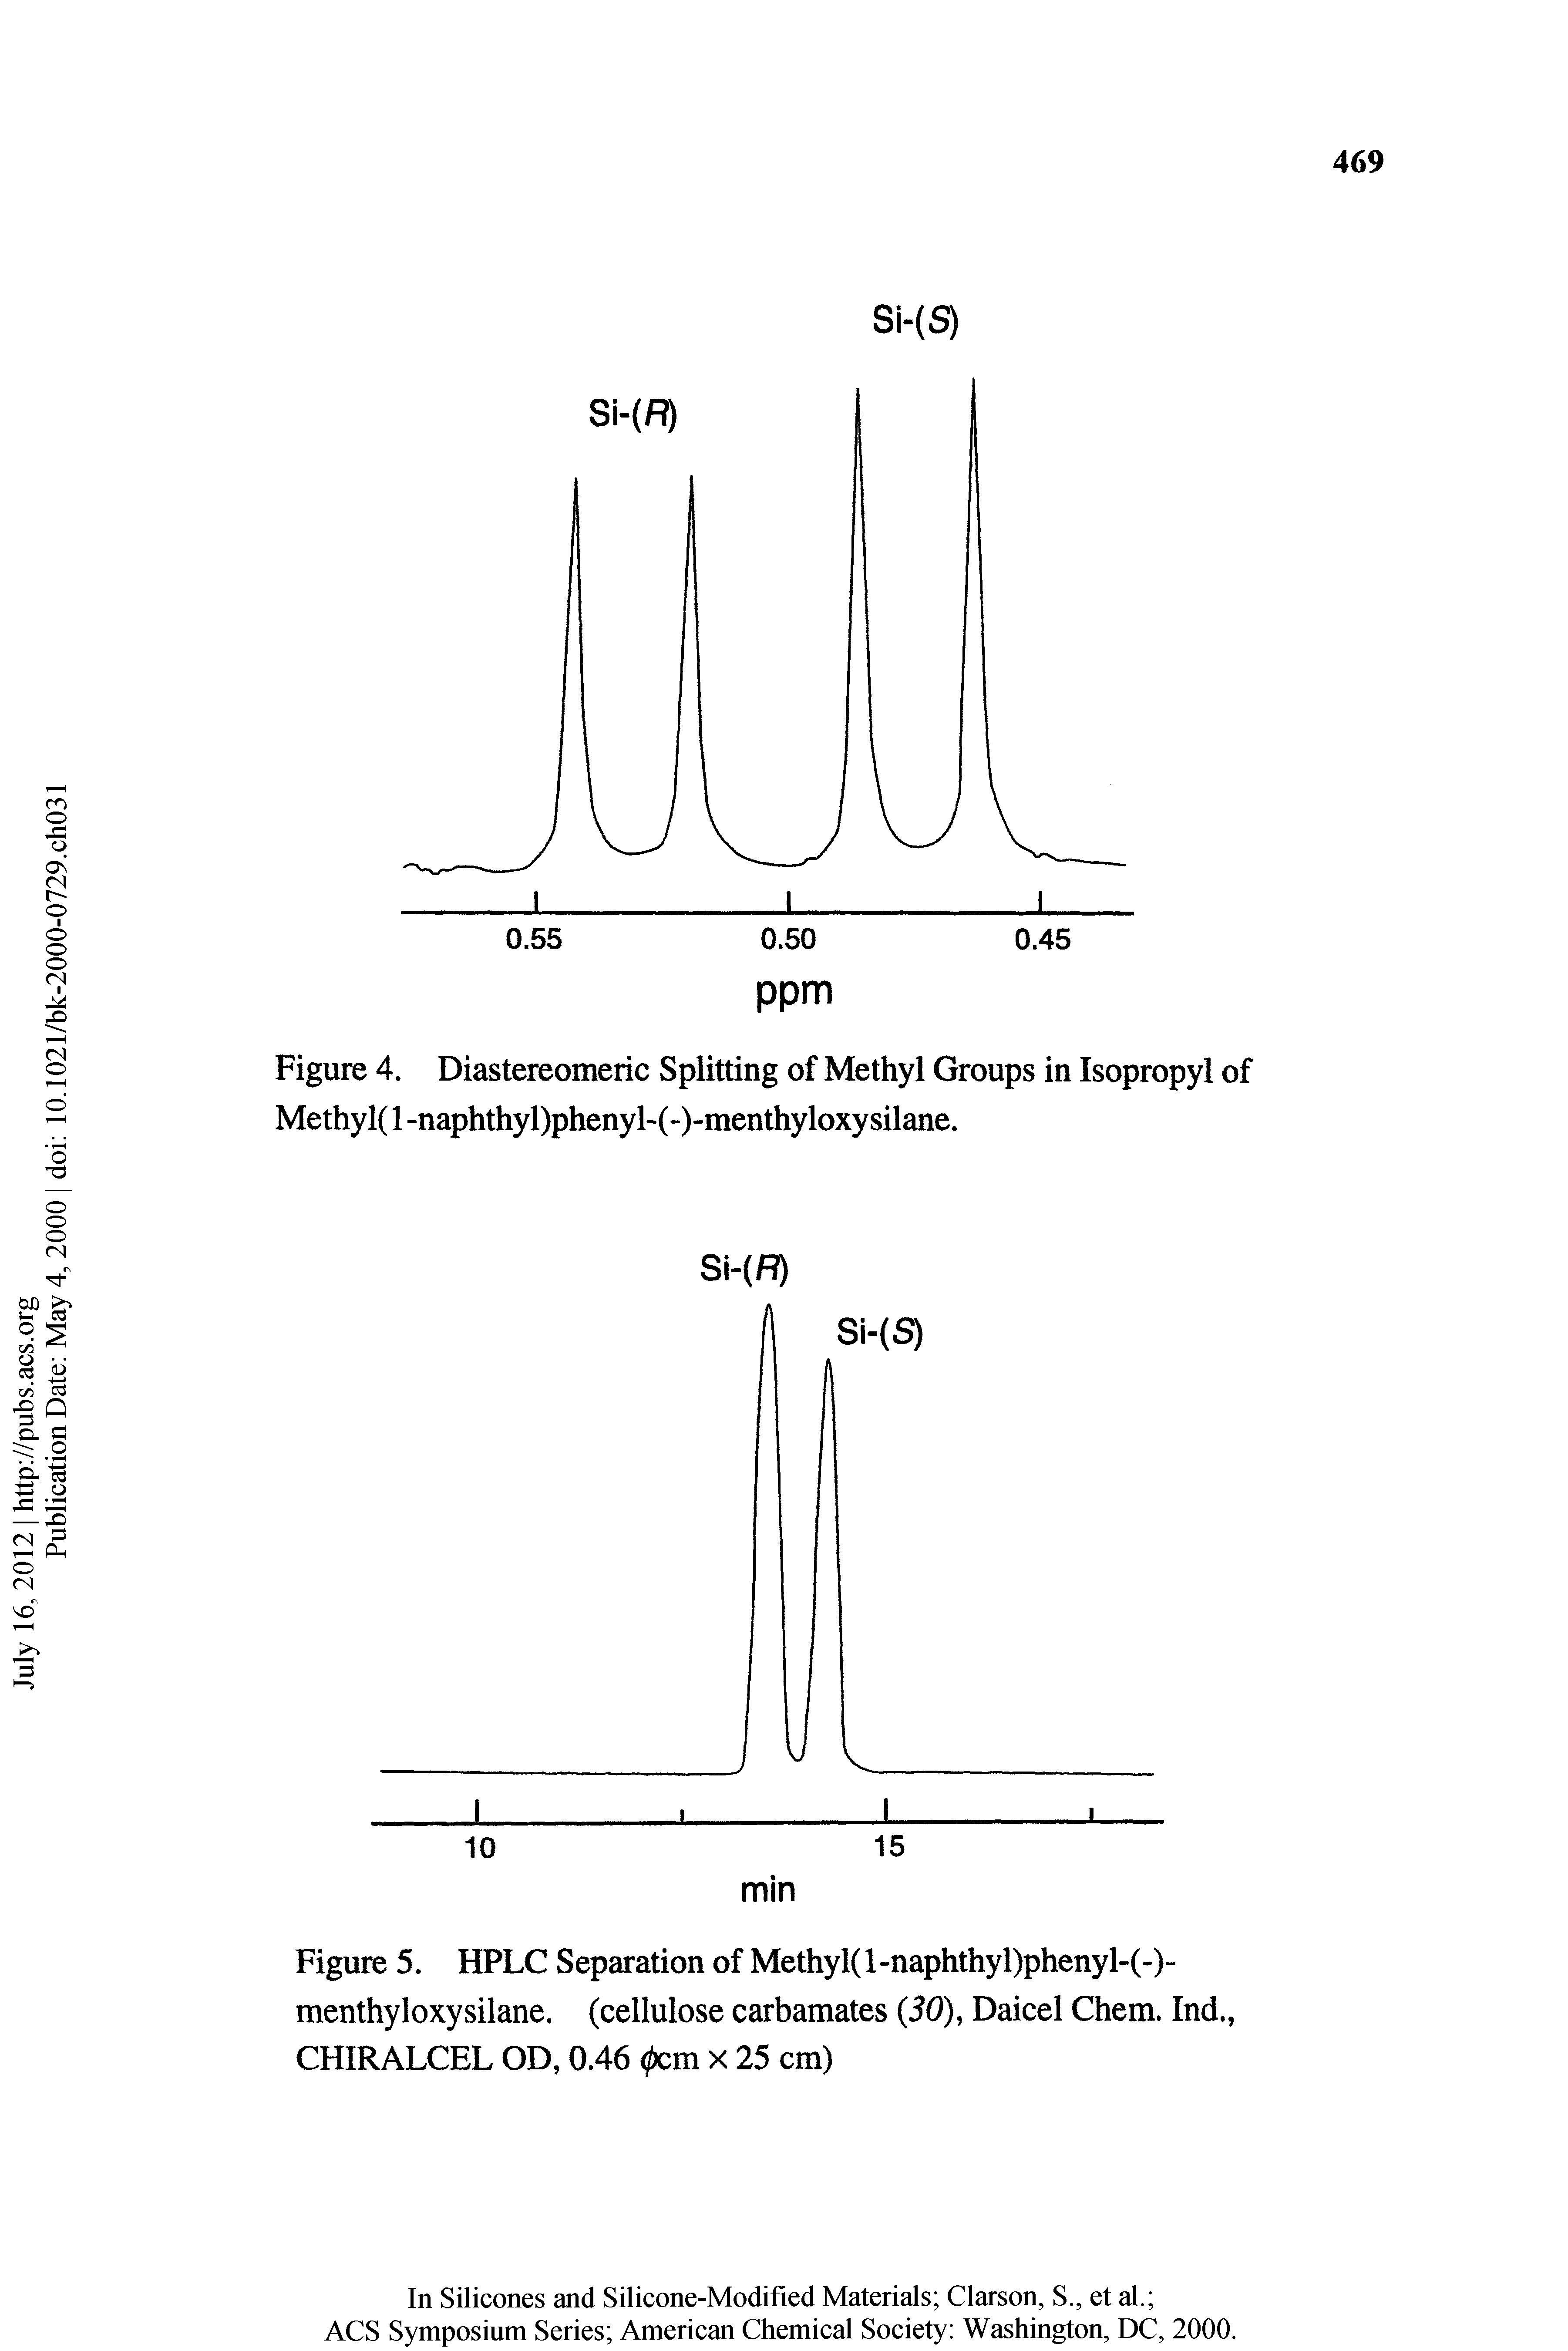 Figure 4. Diasteieomeric Splitting of Methyl Groups in Isopropyl of Methyl( 1 -naphthyl)phenyl-(-)-menthyloxysilane.